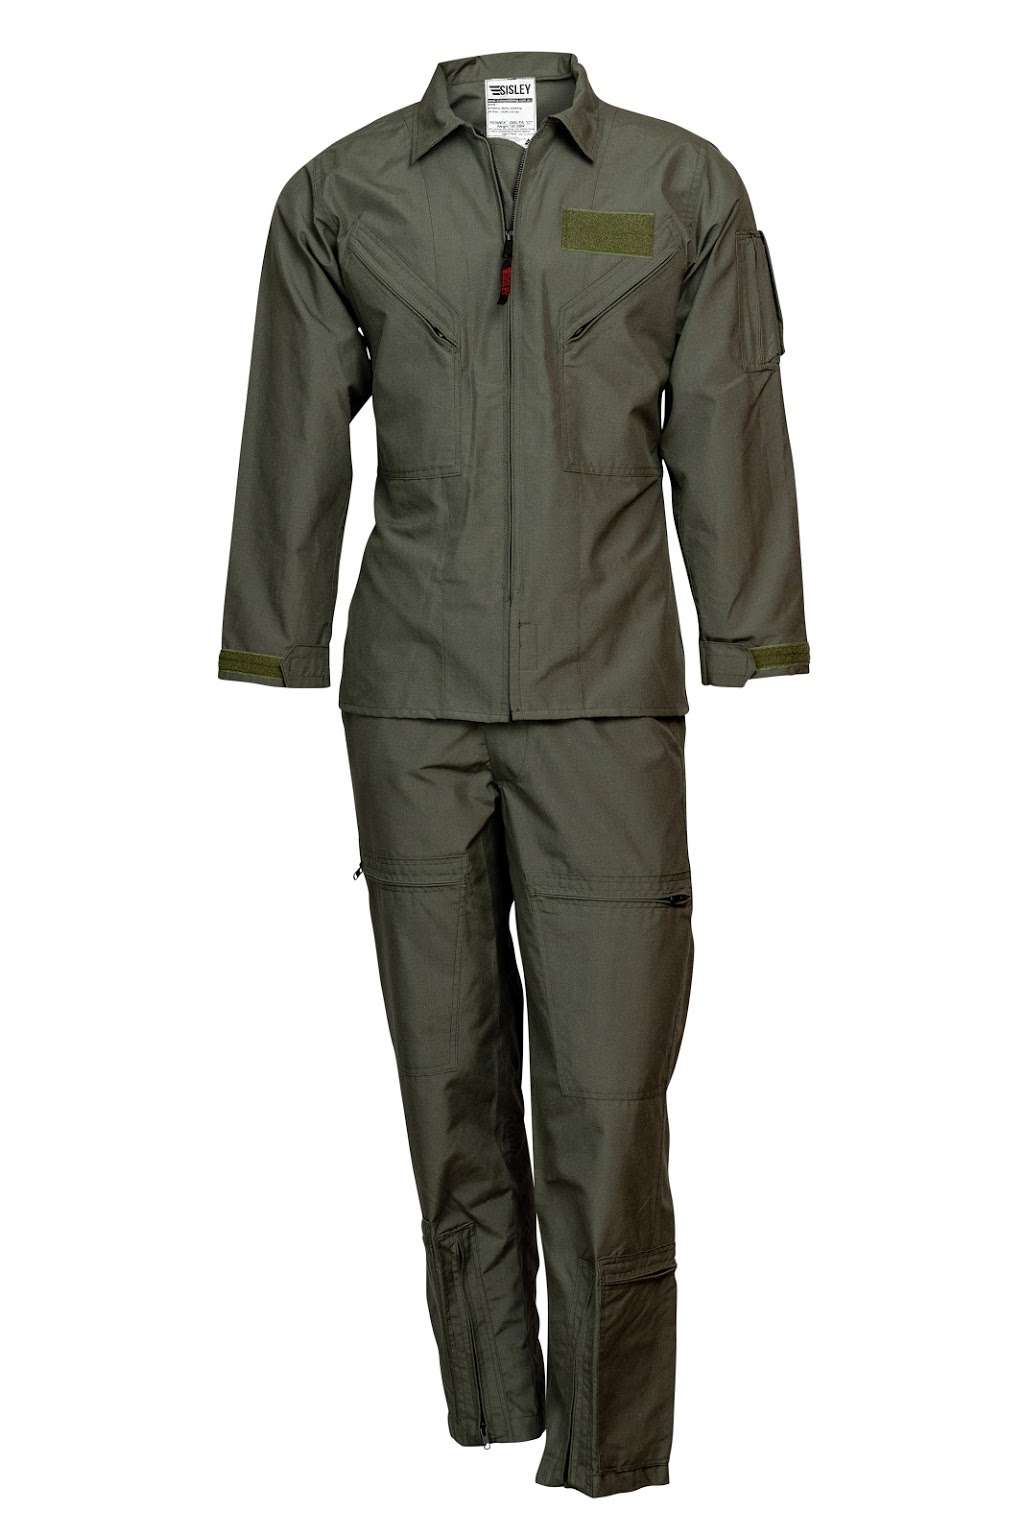 Sisley Evolution Flight Suits | 185 West Dr, Melbourne, FL 32904 | Phone: (321) 821-4724